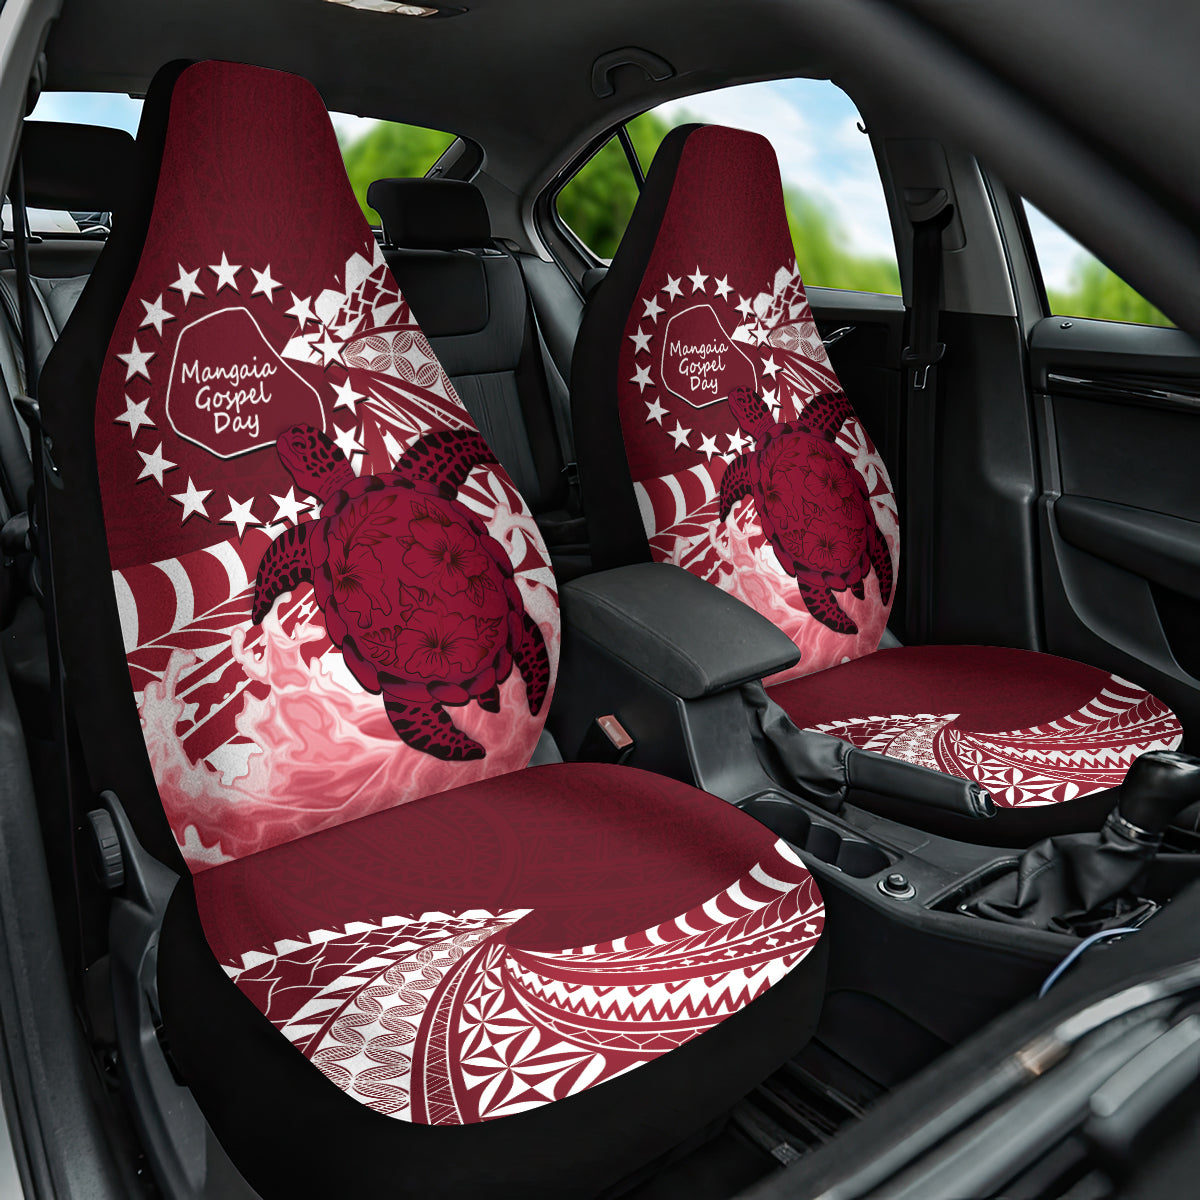 Cook Islands Mangaia Gospel Day Car Seat Cover Polynesian Art With Sea Turtle